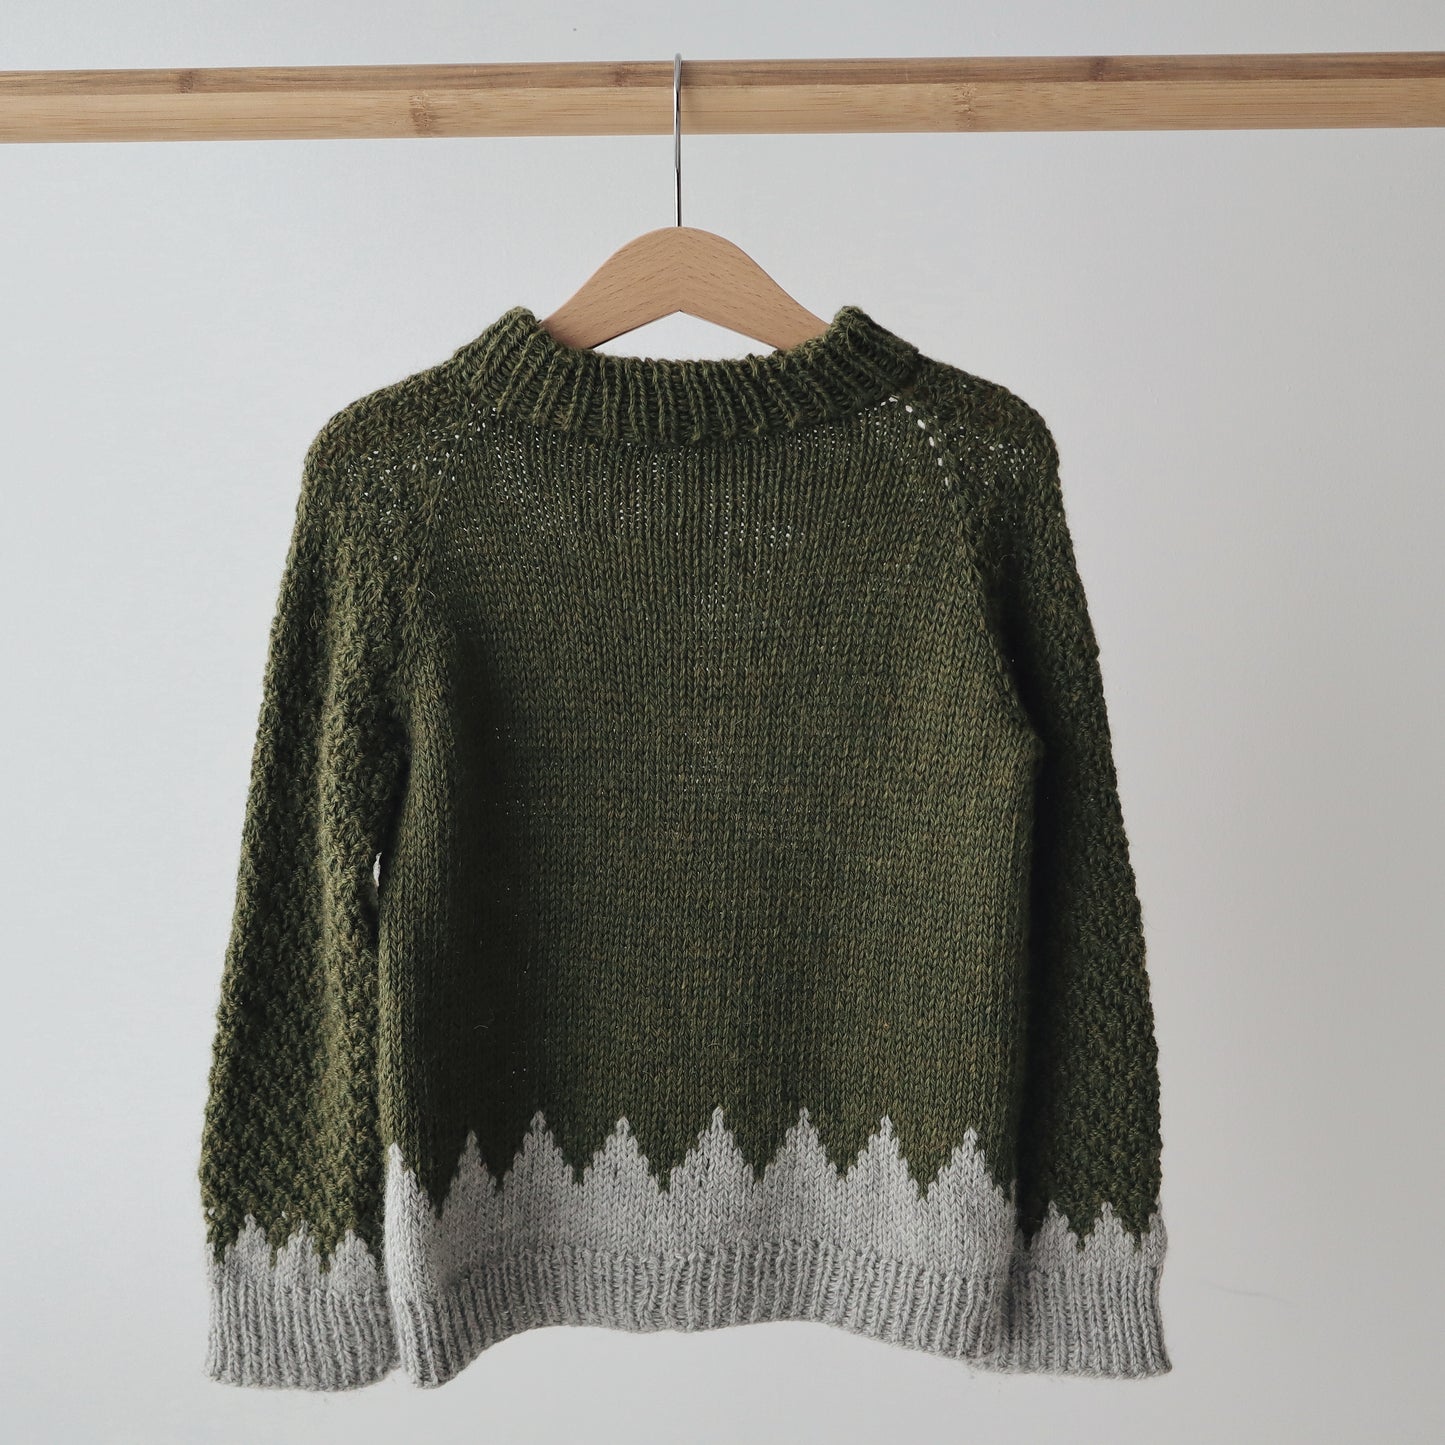 Moss kids sweater